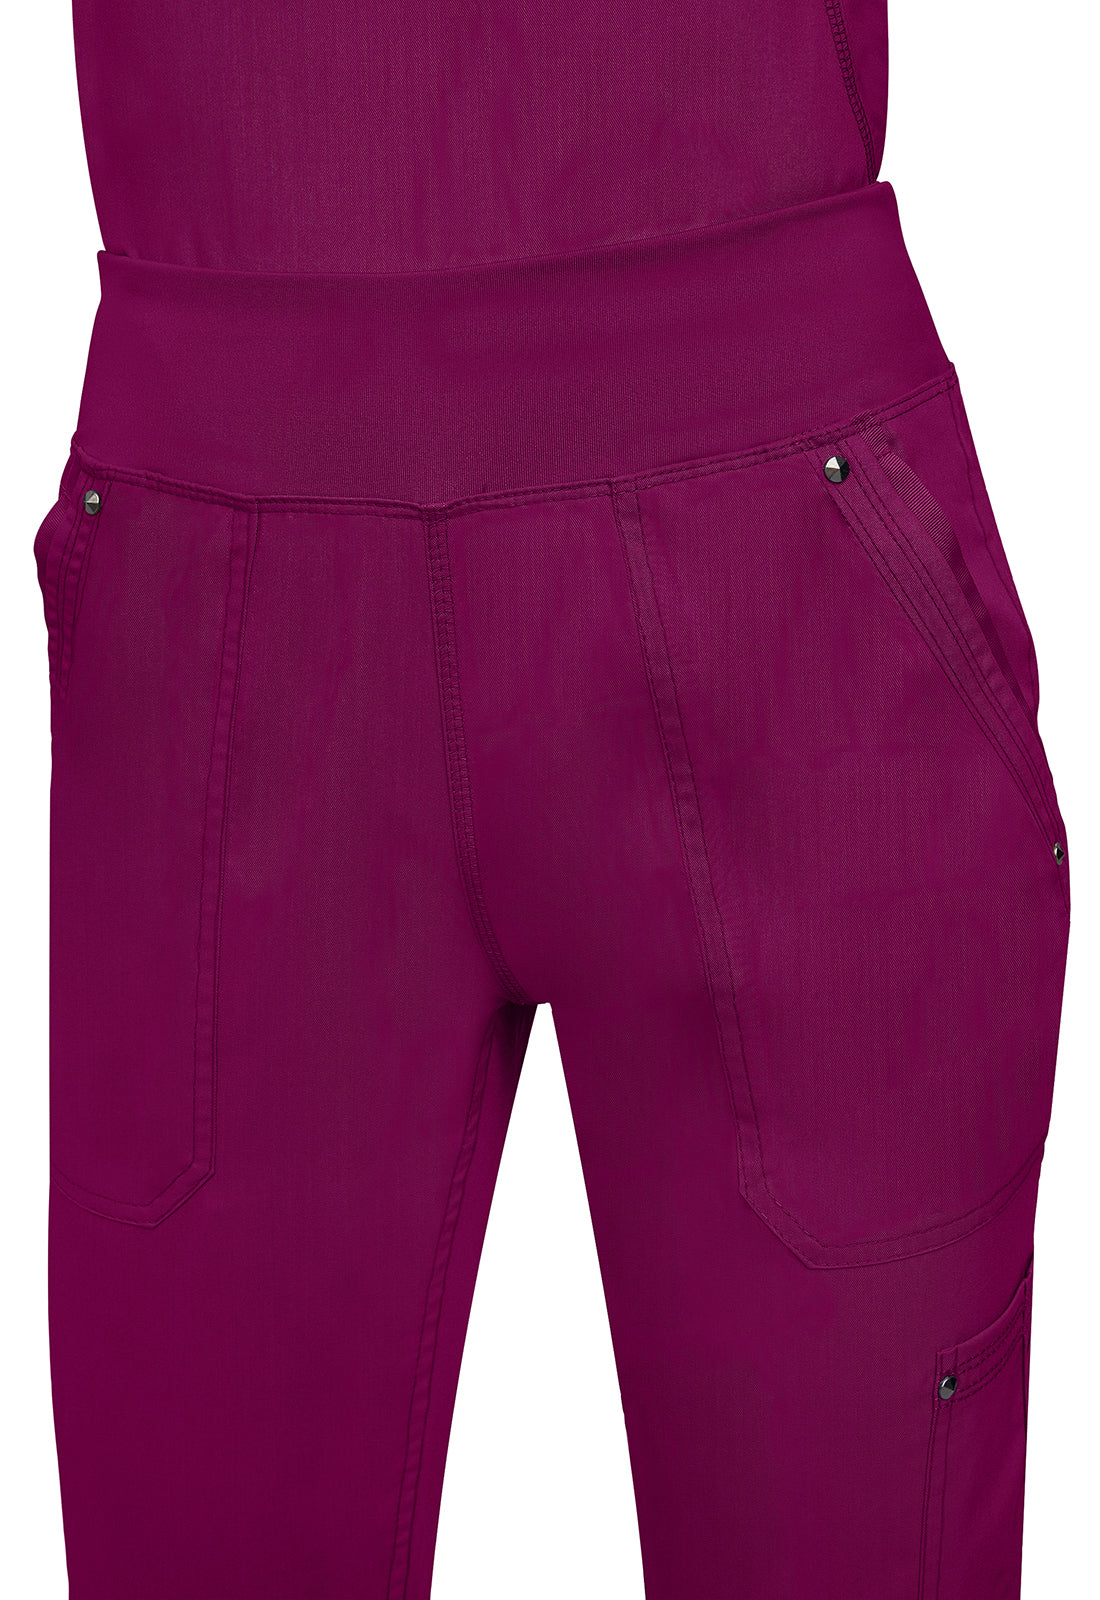 Hands Scrubs Purple Label Tori PETITE Yoga Pants, Petite Scrub Pants